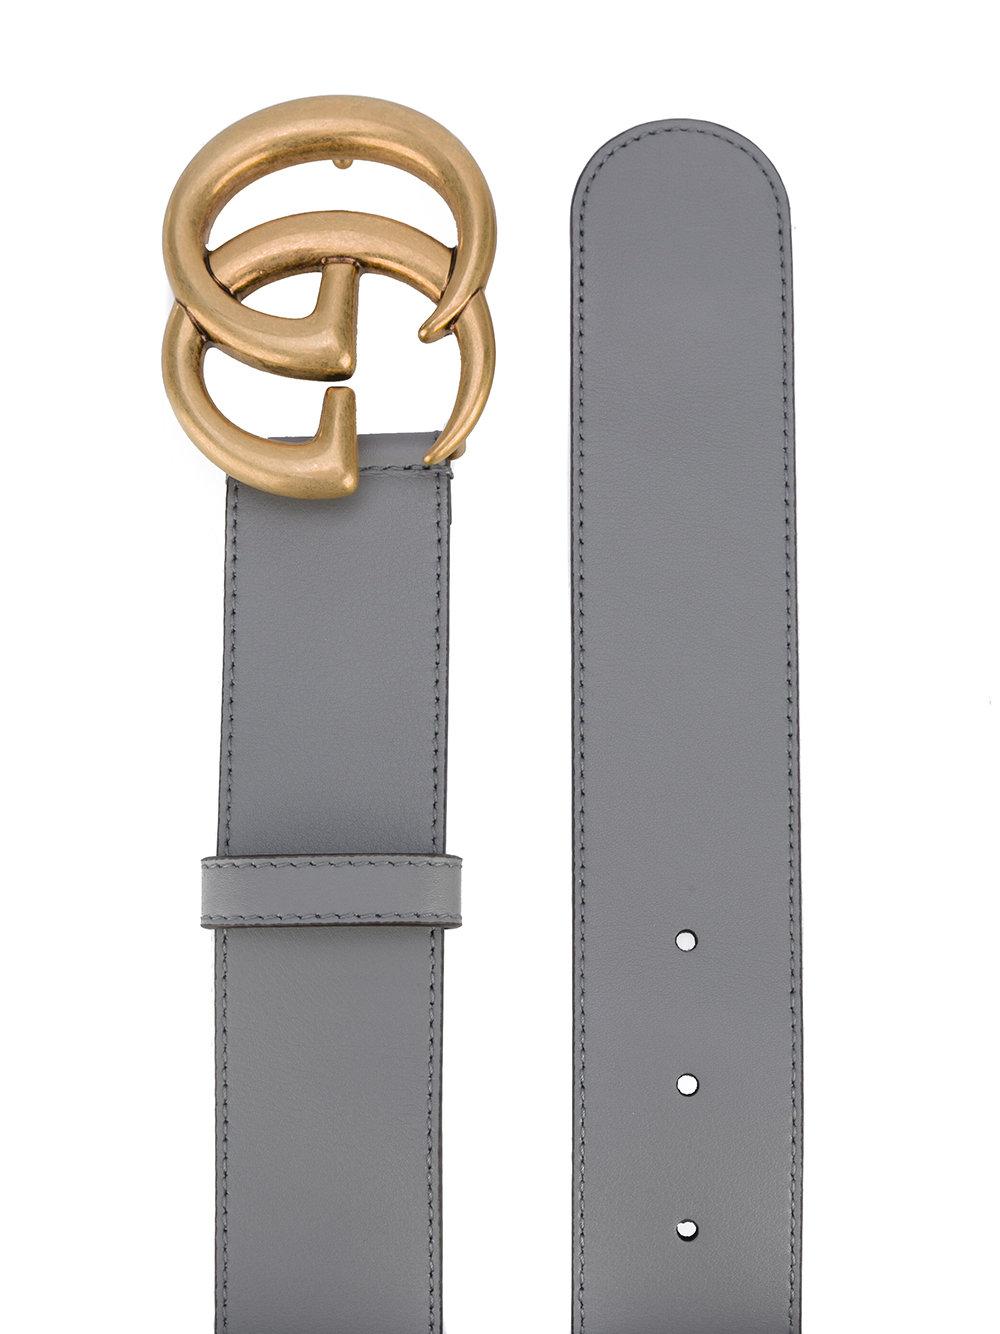 Lyst - Gucci - Gg Buckle Belt - Women - Leather - 90 in Gray